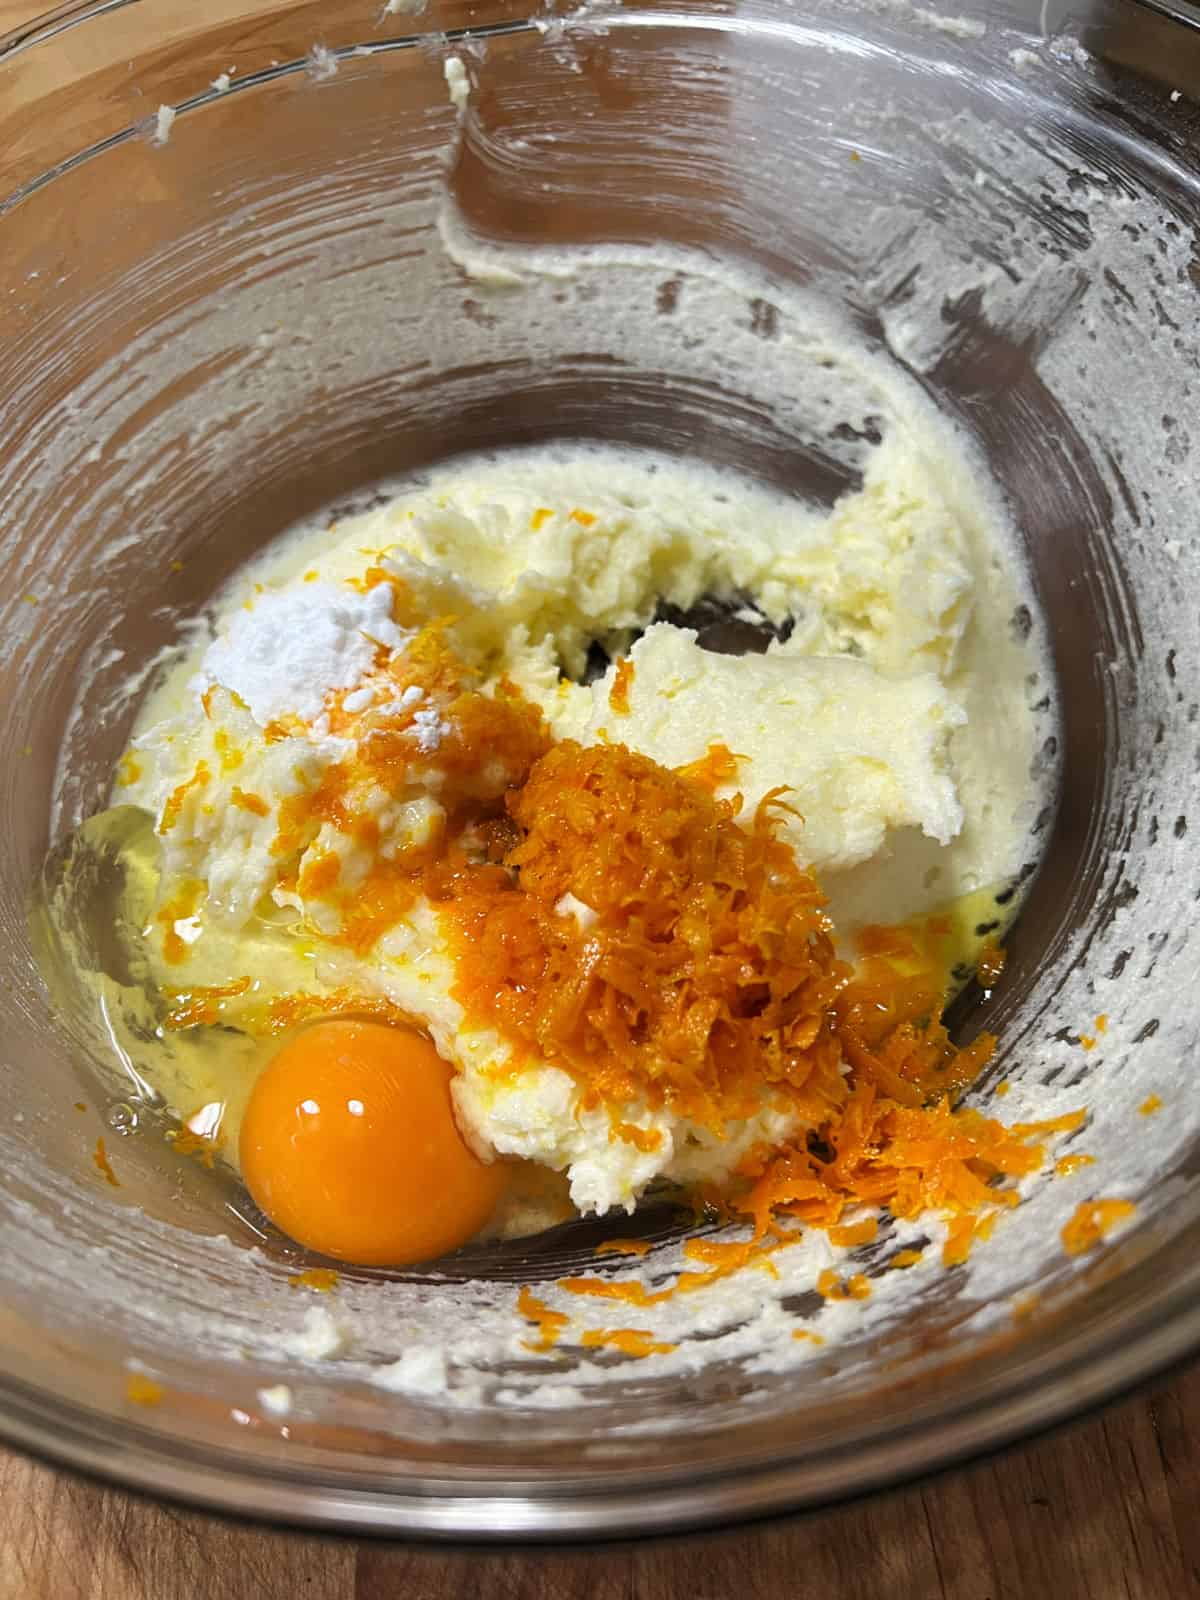 Adding orange zest and egg to the bowl.